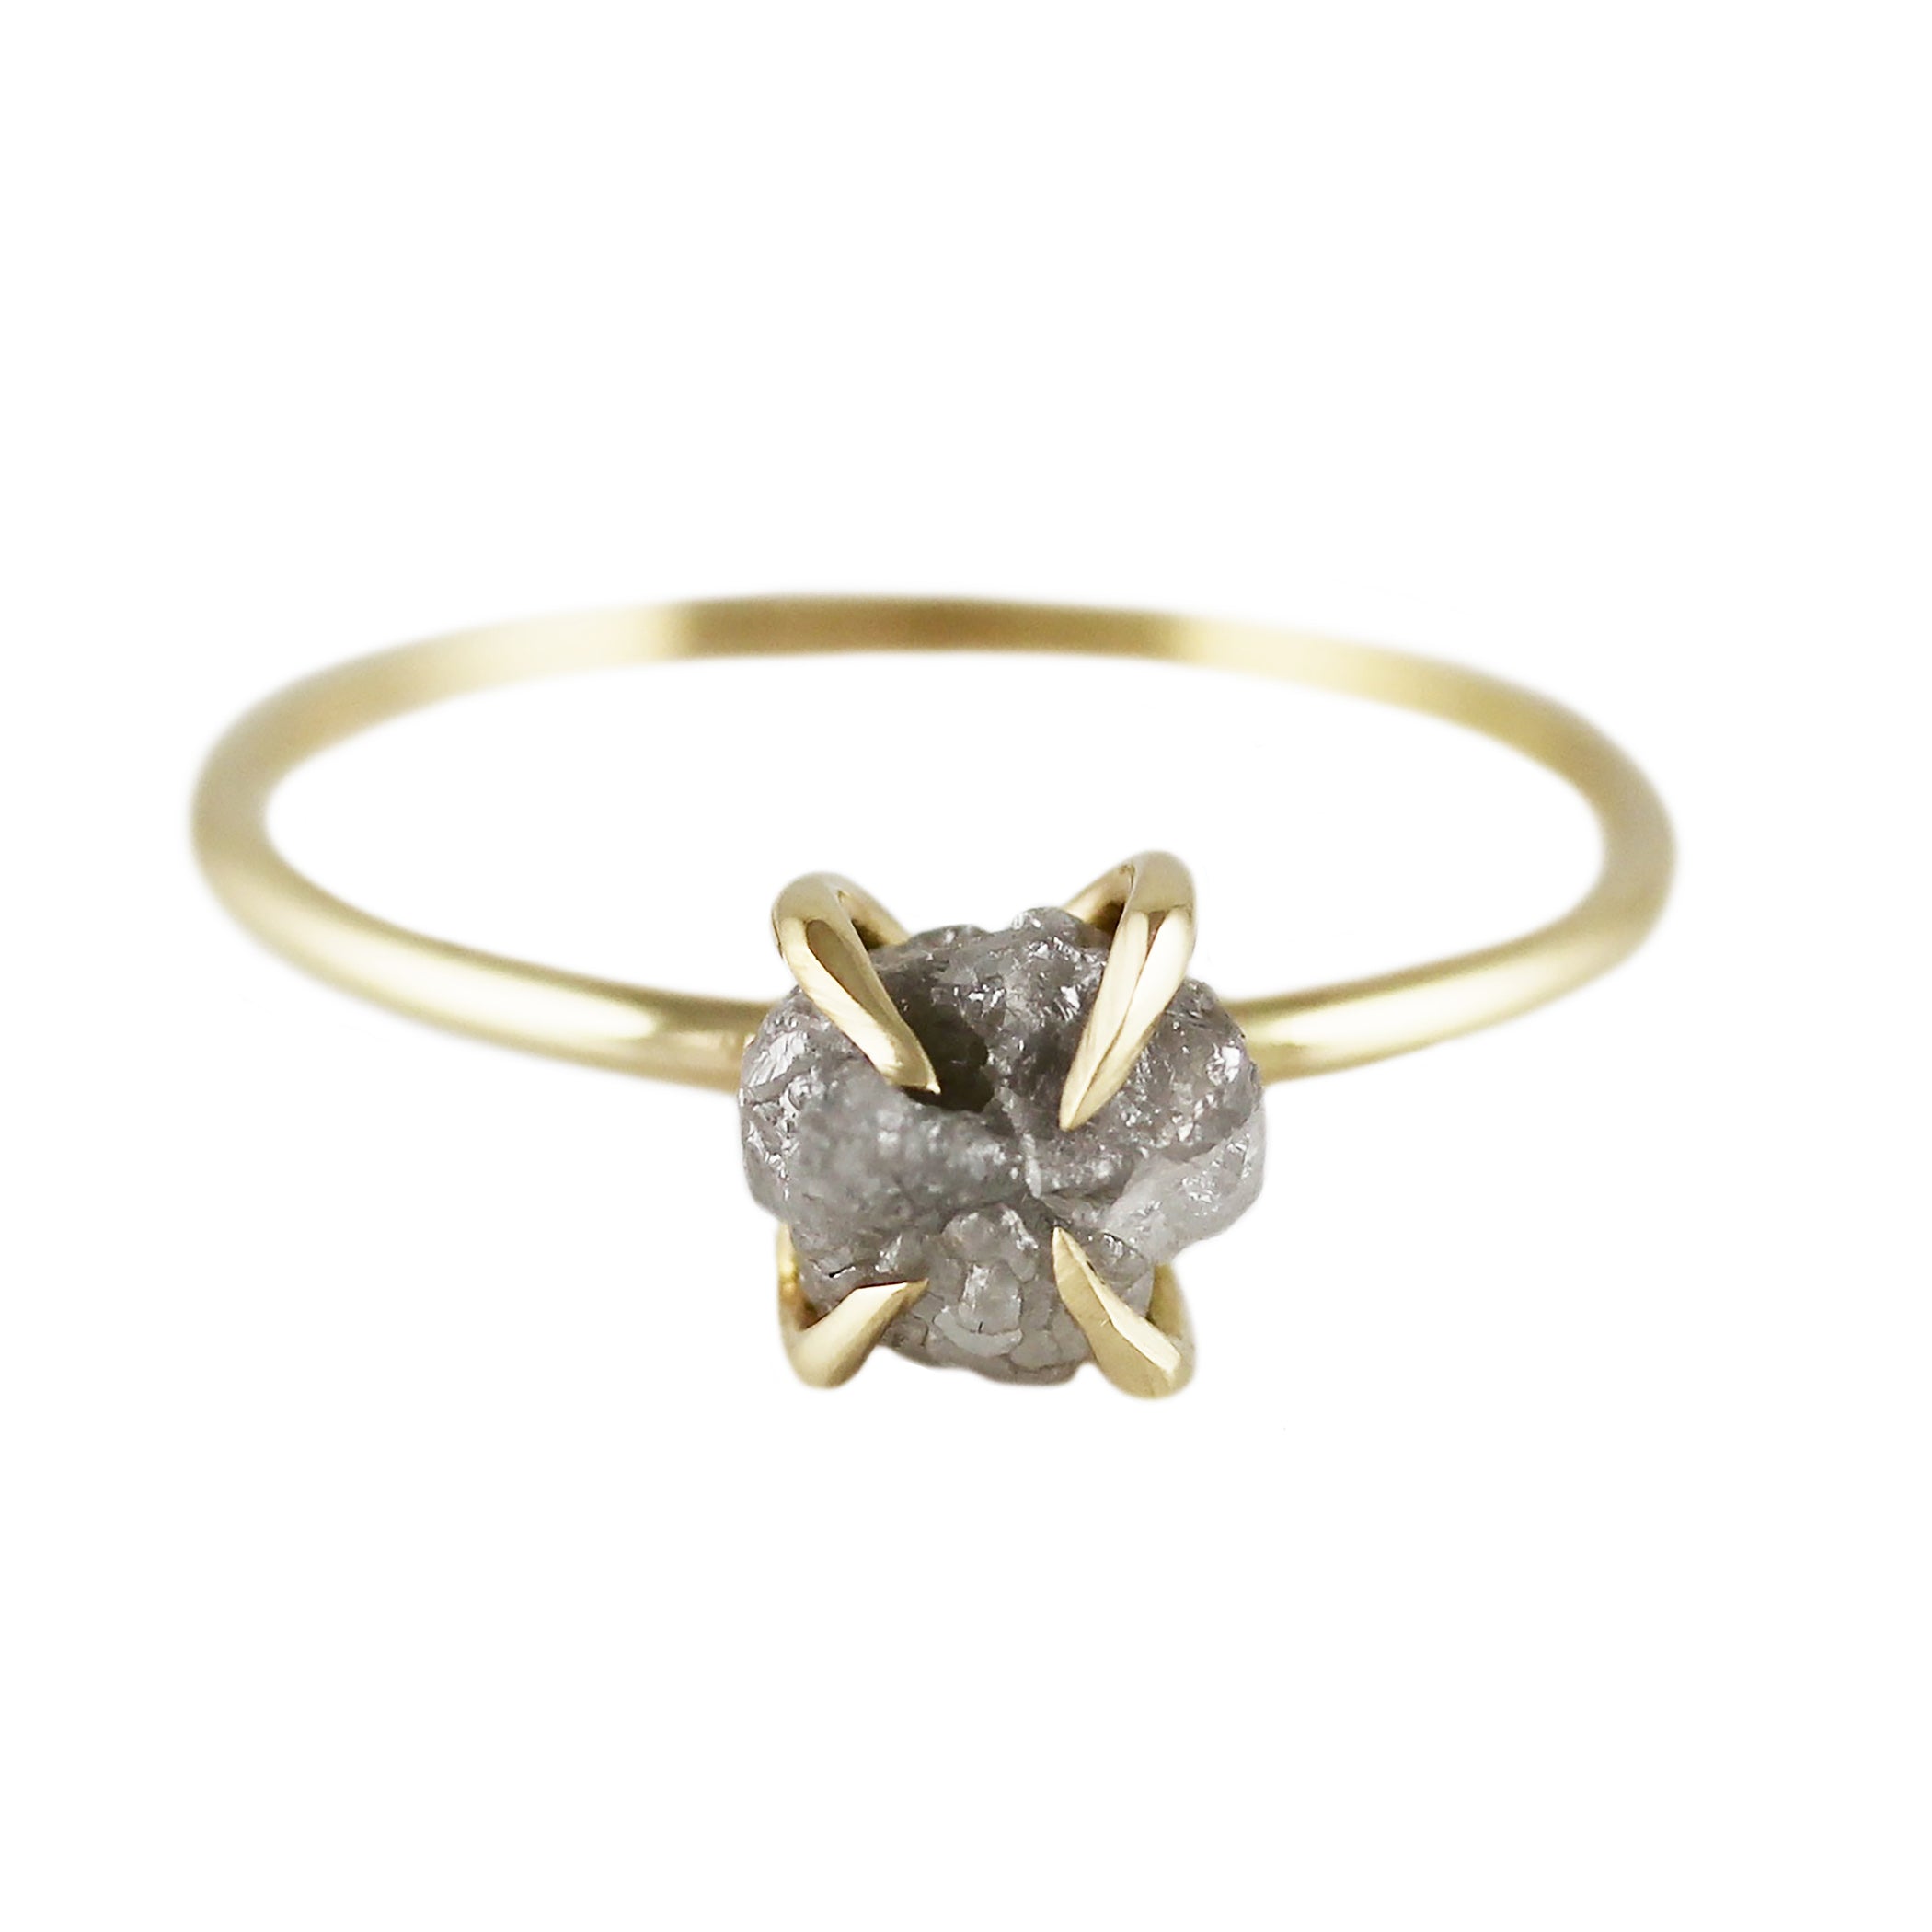 Rough Diamond Rings - What's The Deal? - Casavir Jewelry